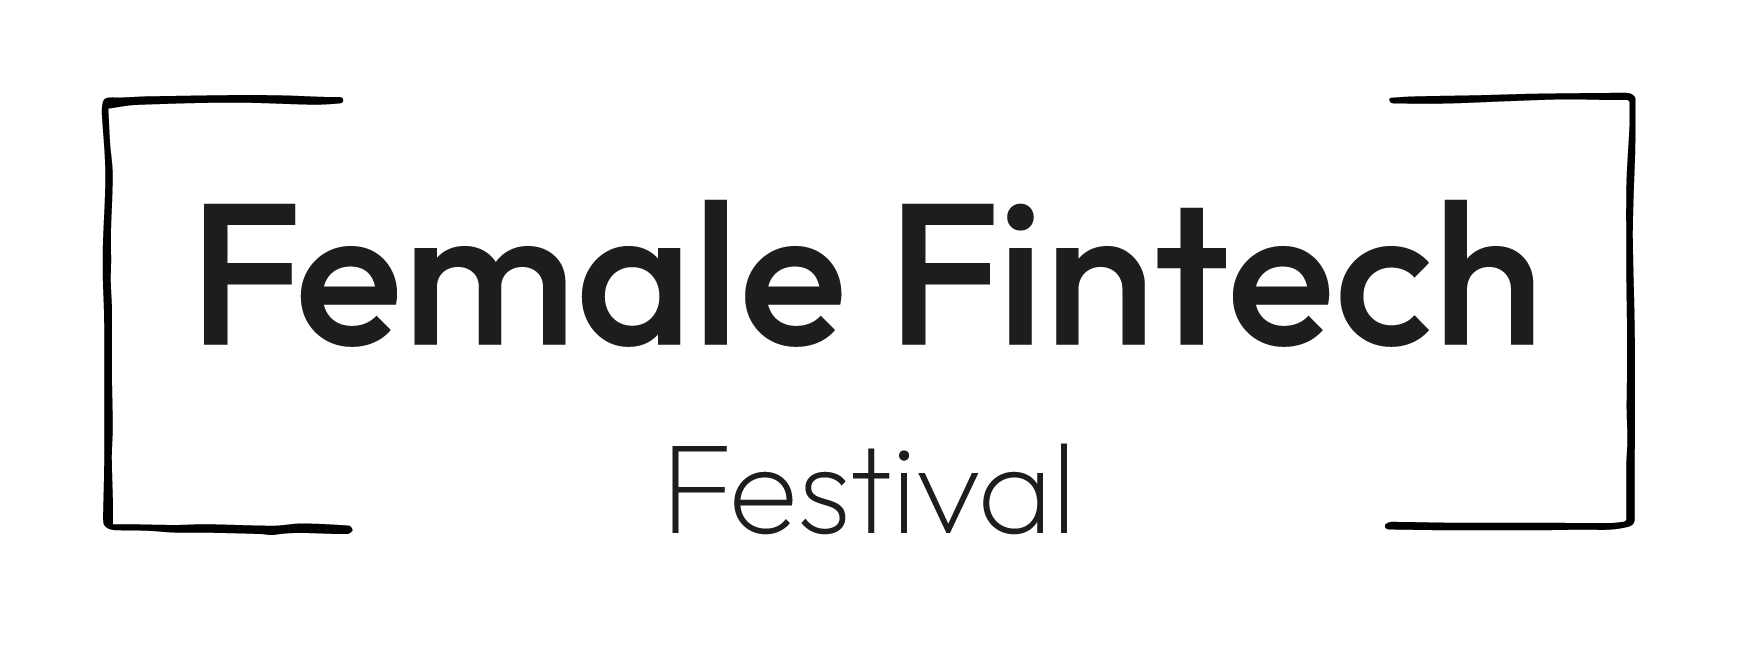 Female Fintech Festival